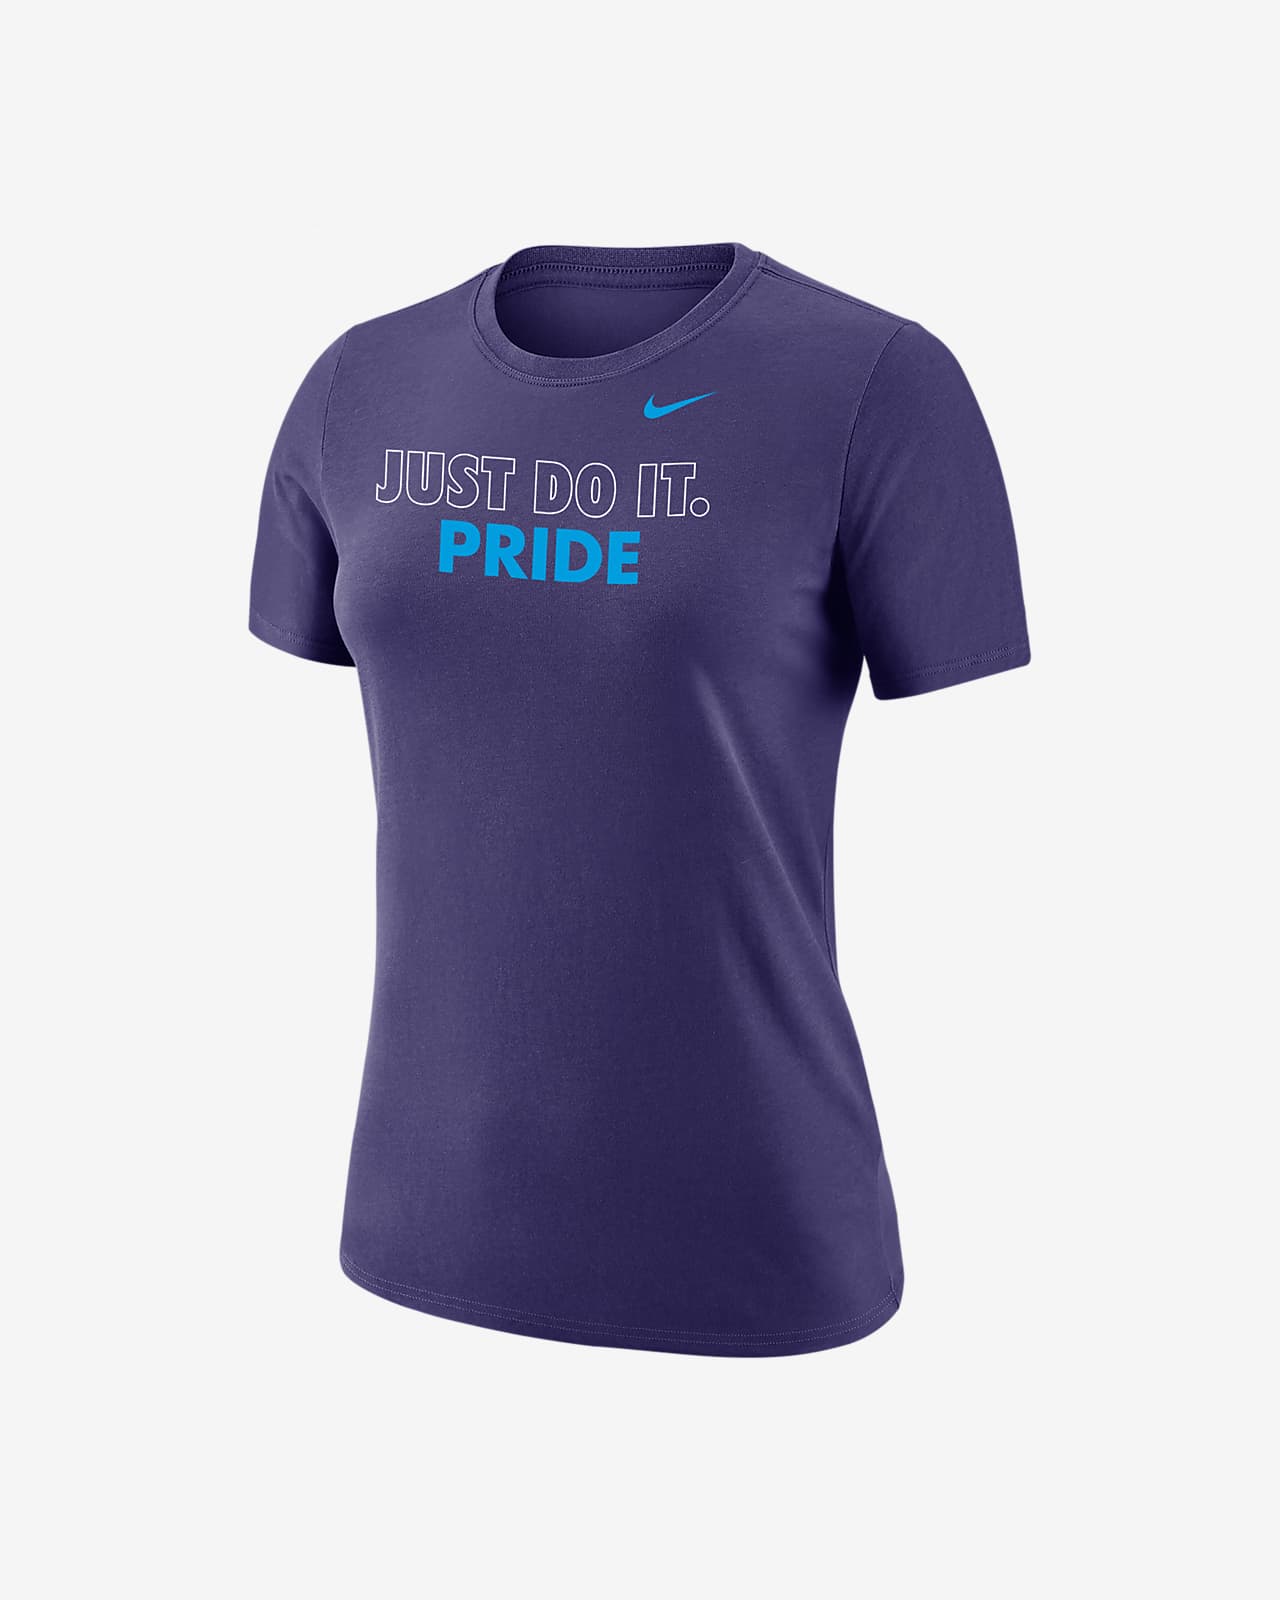 Orlando Pride Women's Nike Soccer T-Shirt